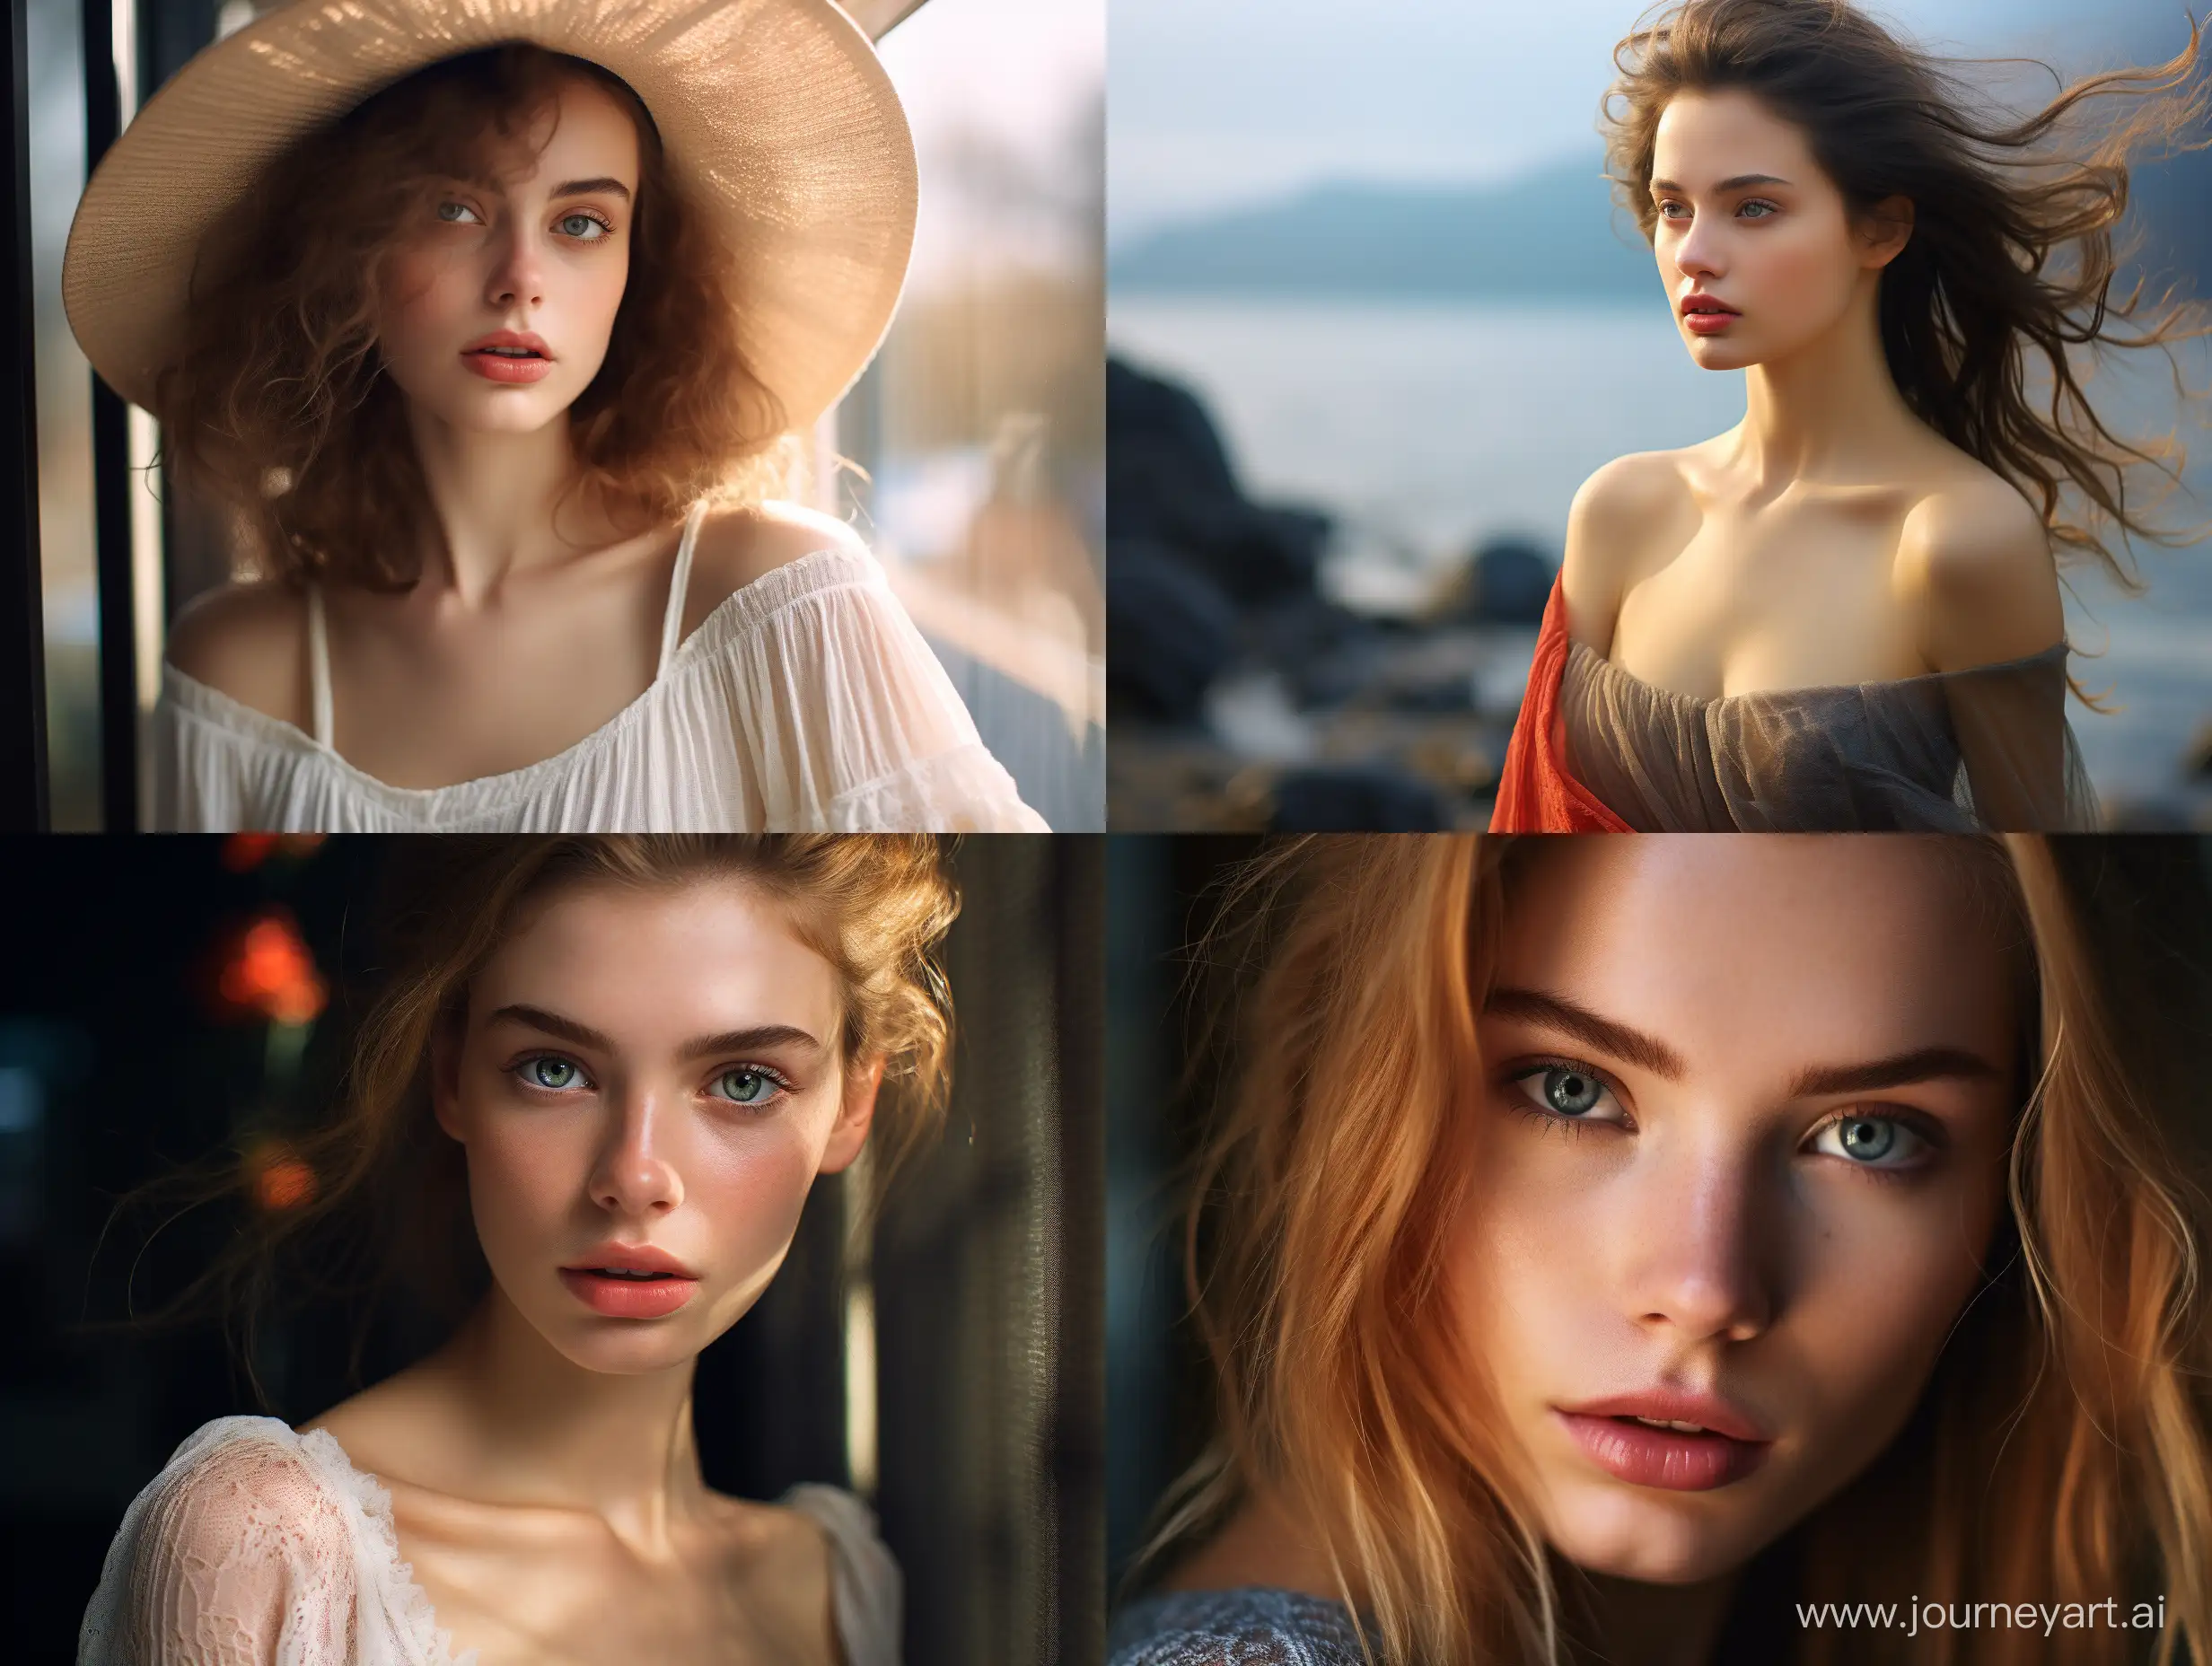 UltraDetailed-Portrait-Exquisite-Beauty-in-8K-Resolution